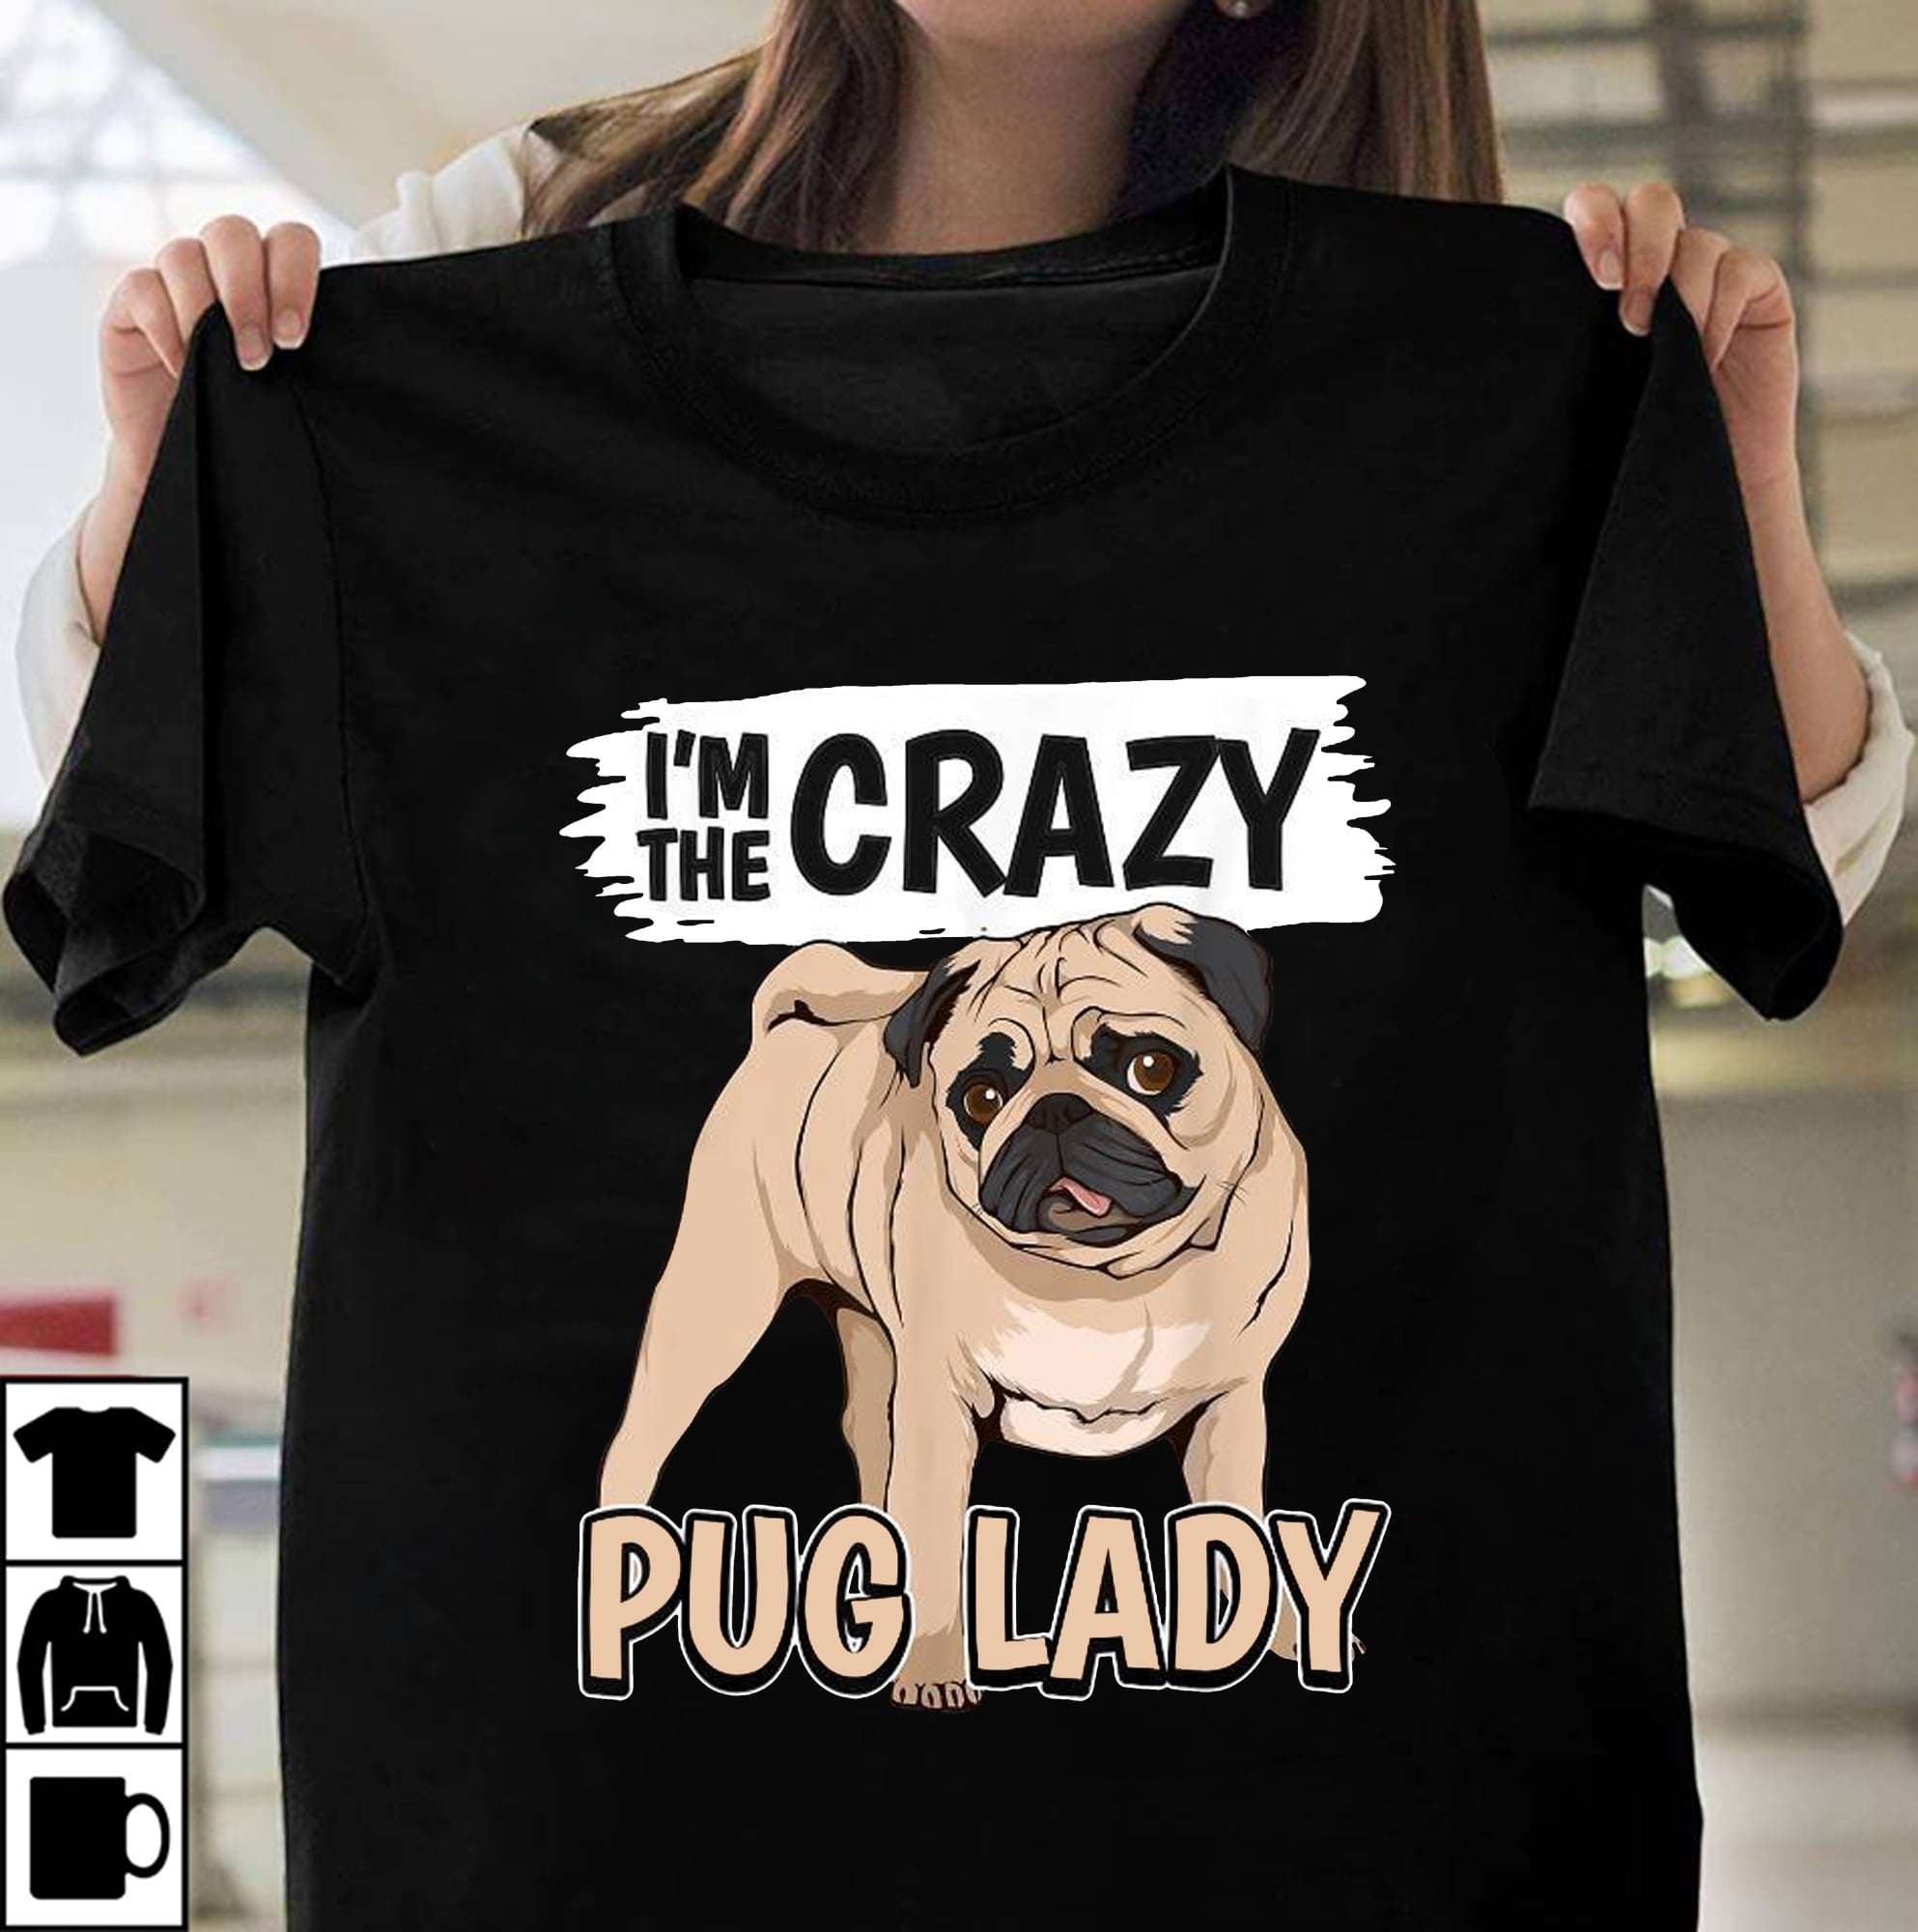 I'm the crazy pug lady - Lady loves pug, pug dog lover